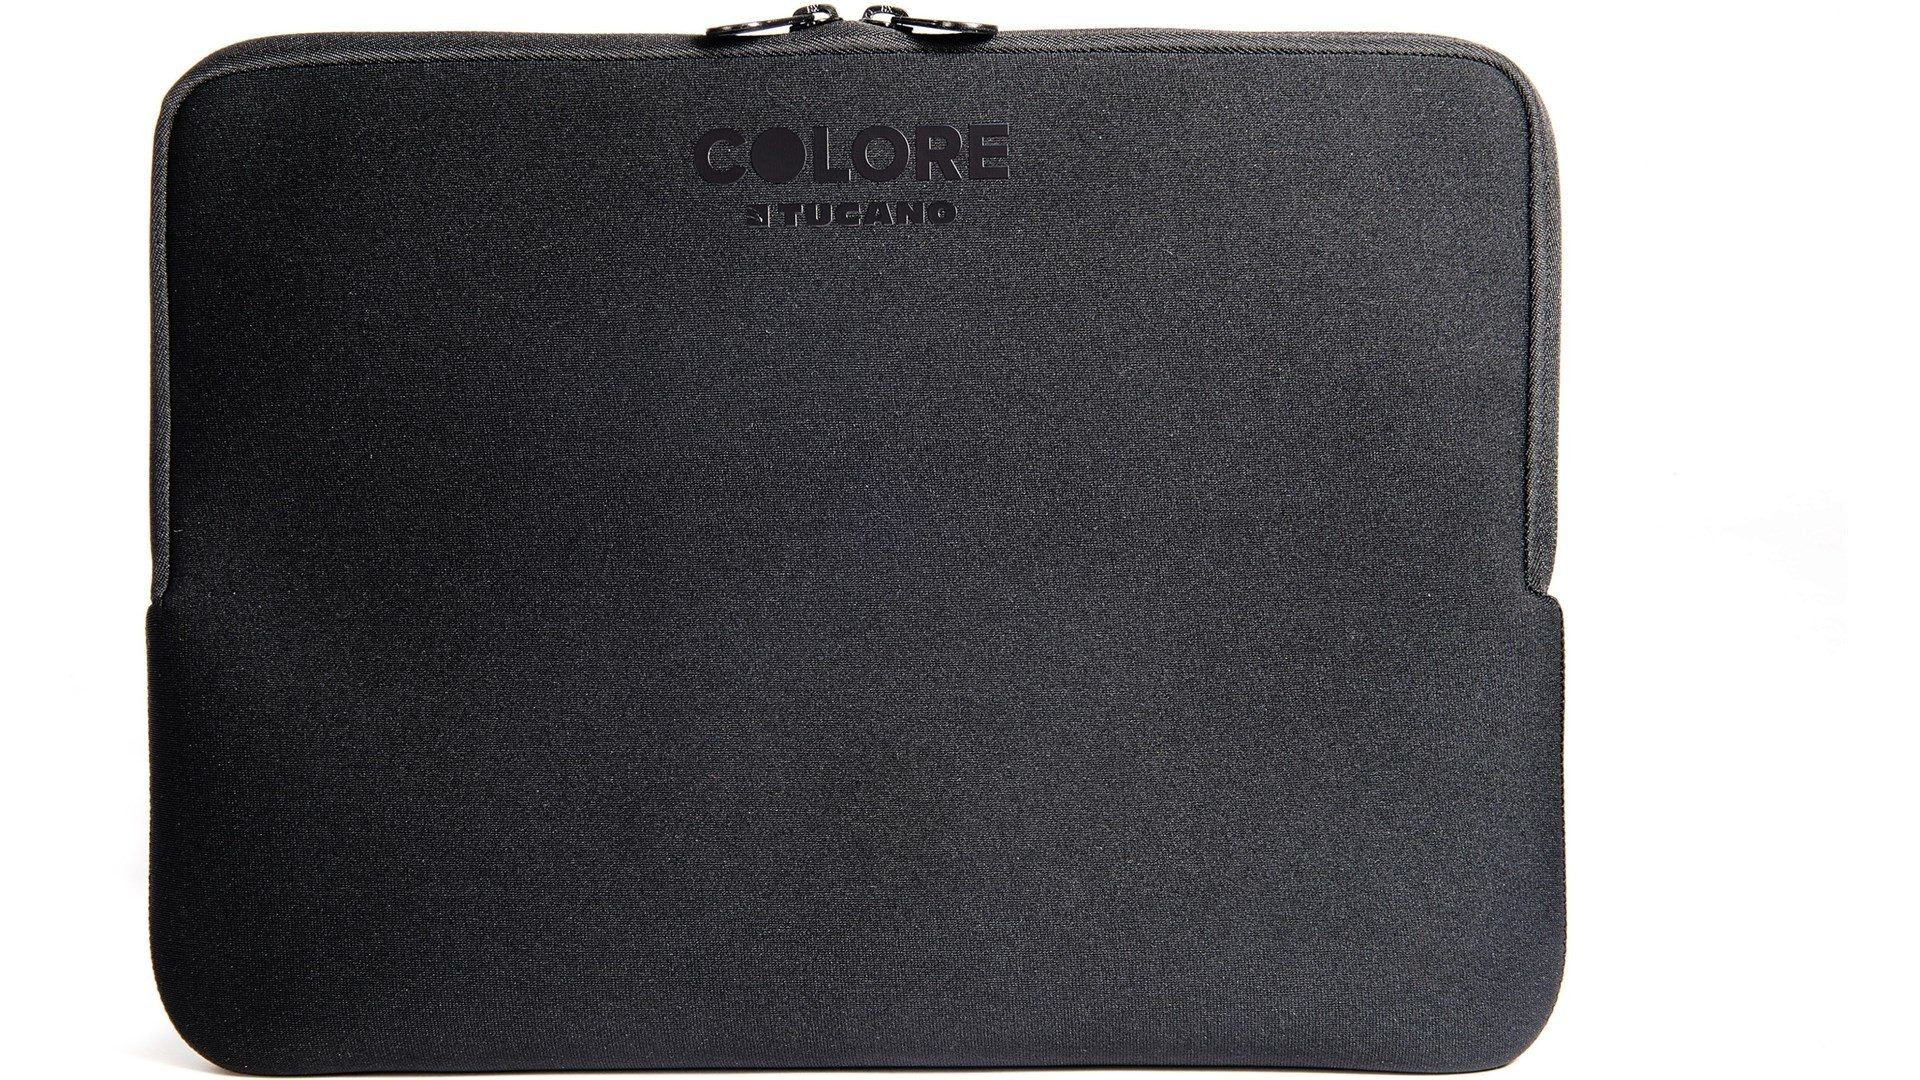 Tucano laptopfodral